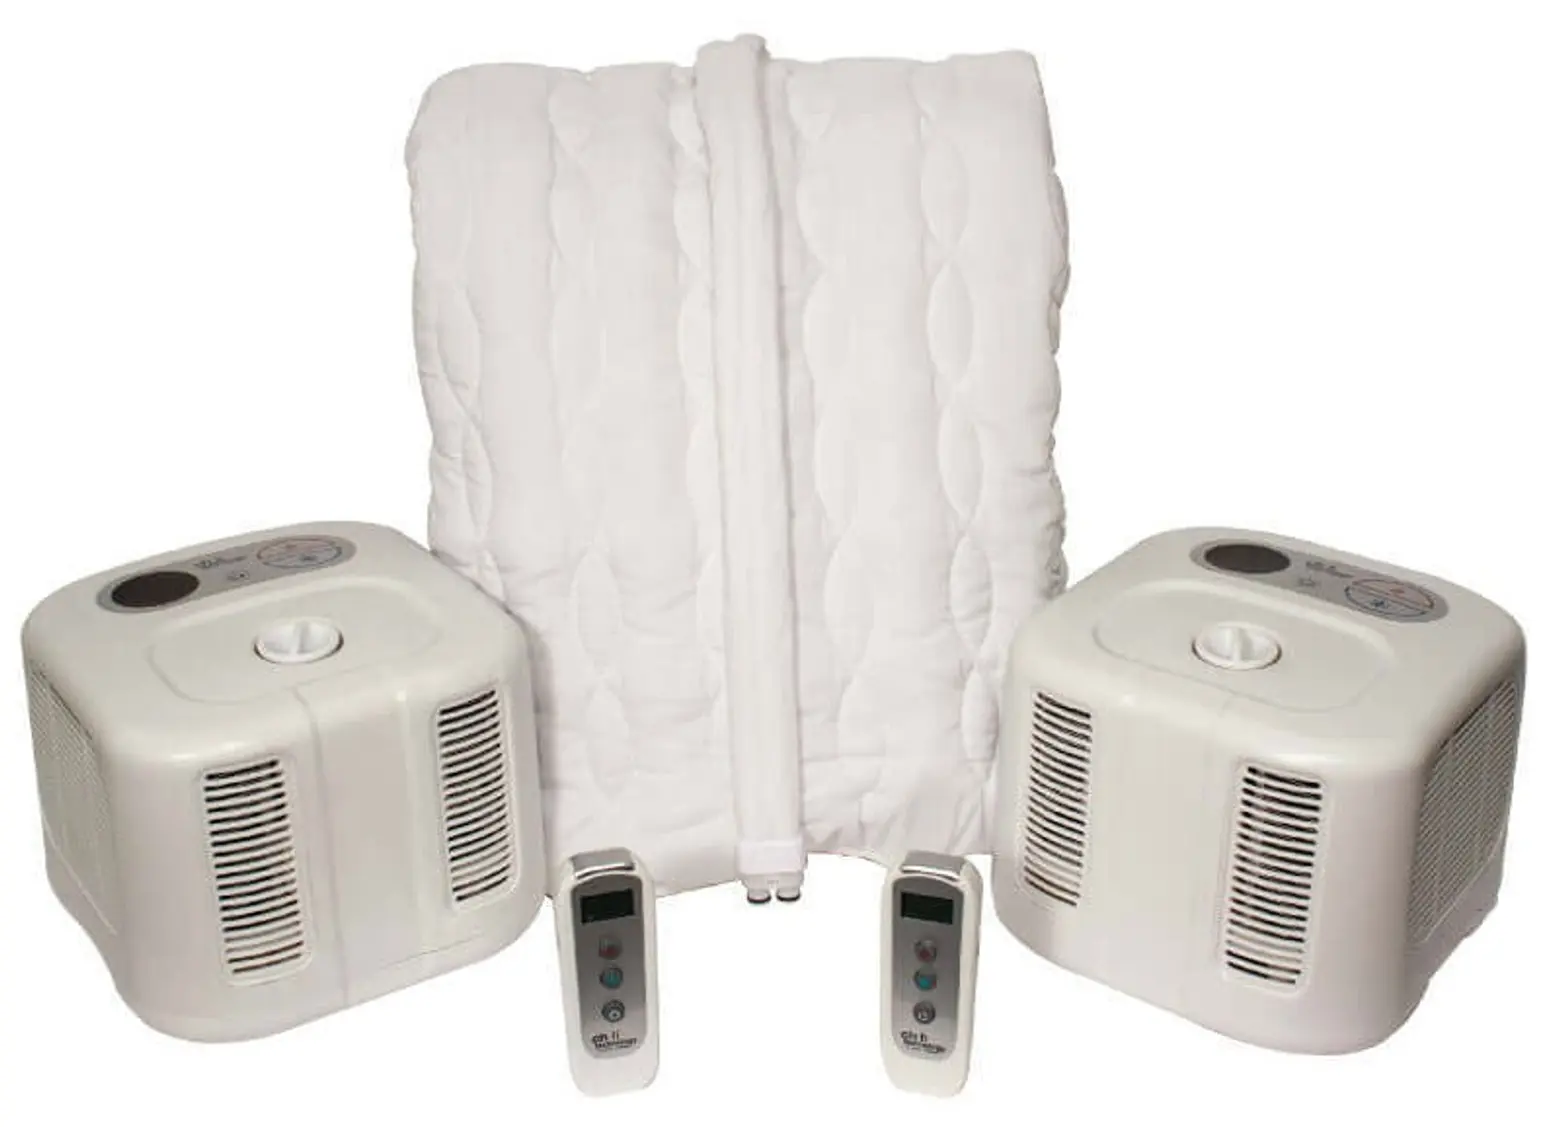 ChiliPad, cooling mattress pad, mattress cover, air conditioner alternative